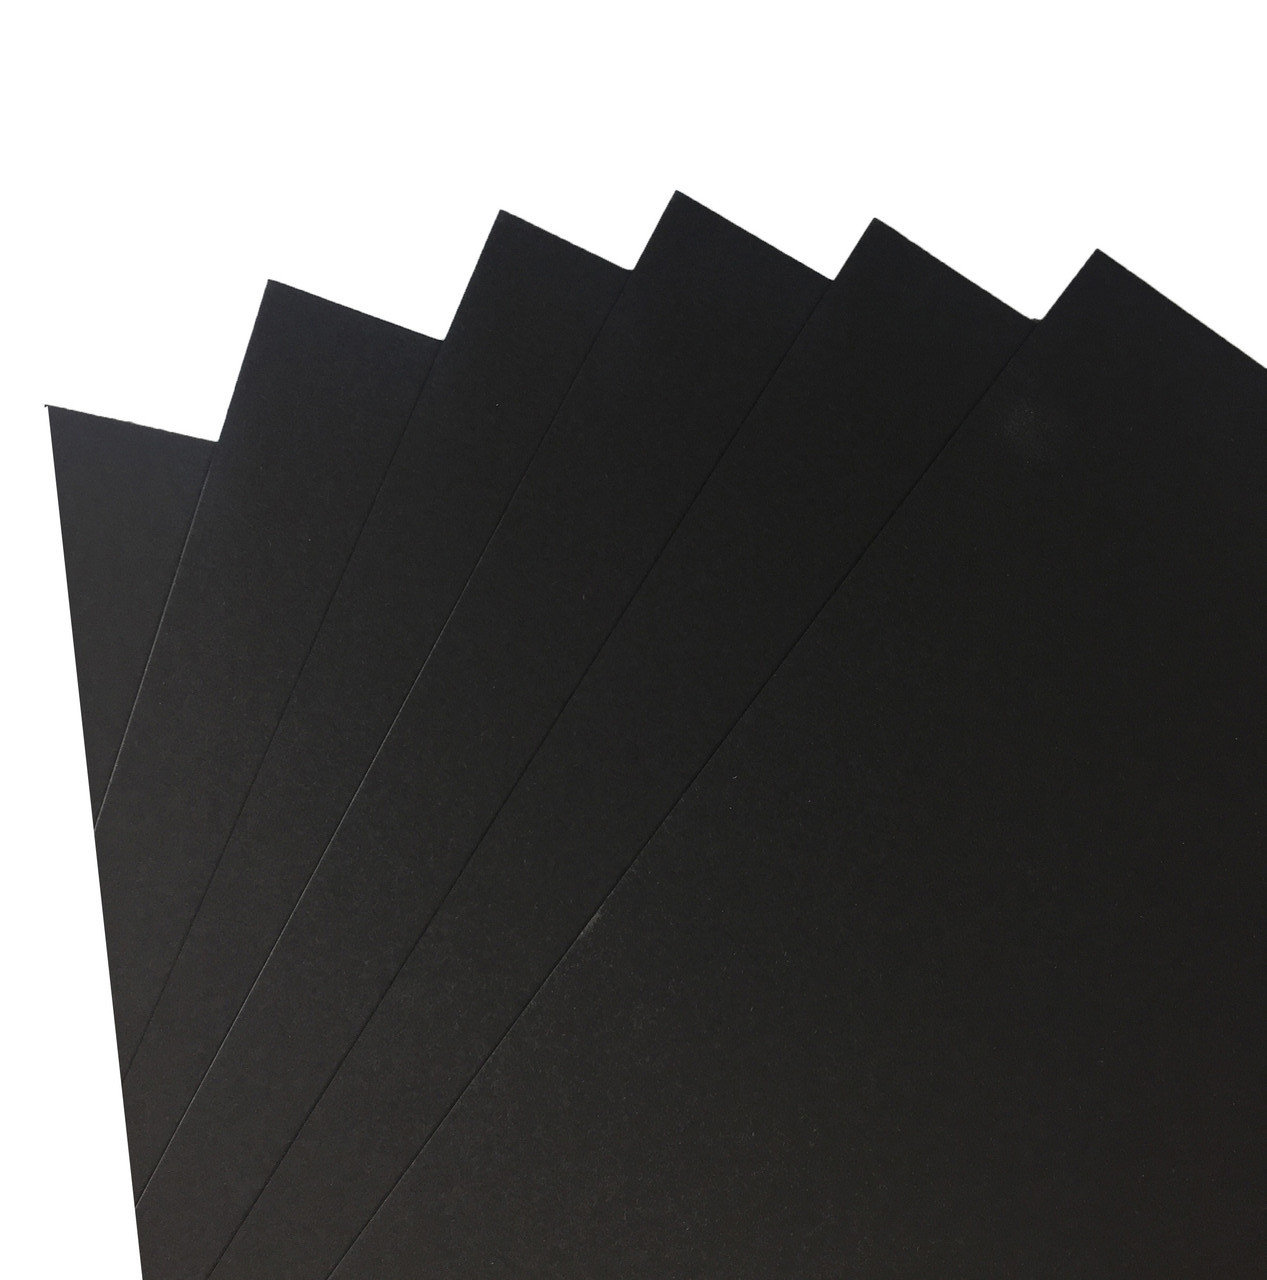 Лист картона черный. Бумага черная длясухих техникgrafart blackмалевичь,150г/м. Черный картон. Черная бумага. Черная плотная бумага.